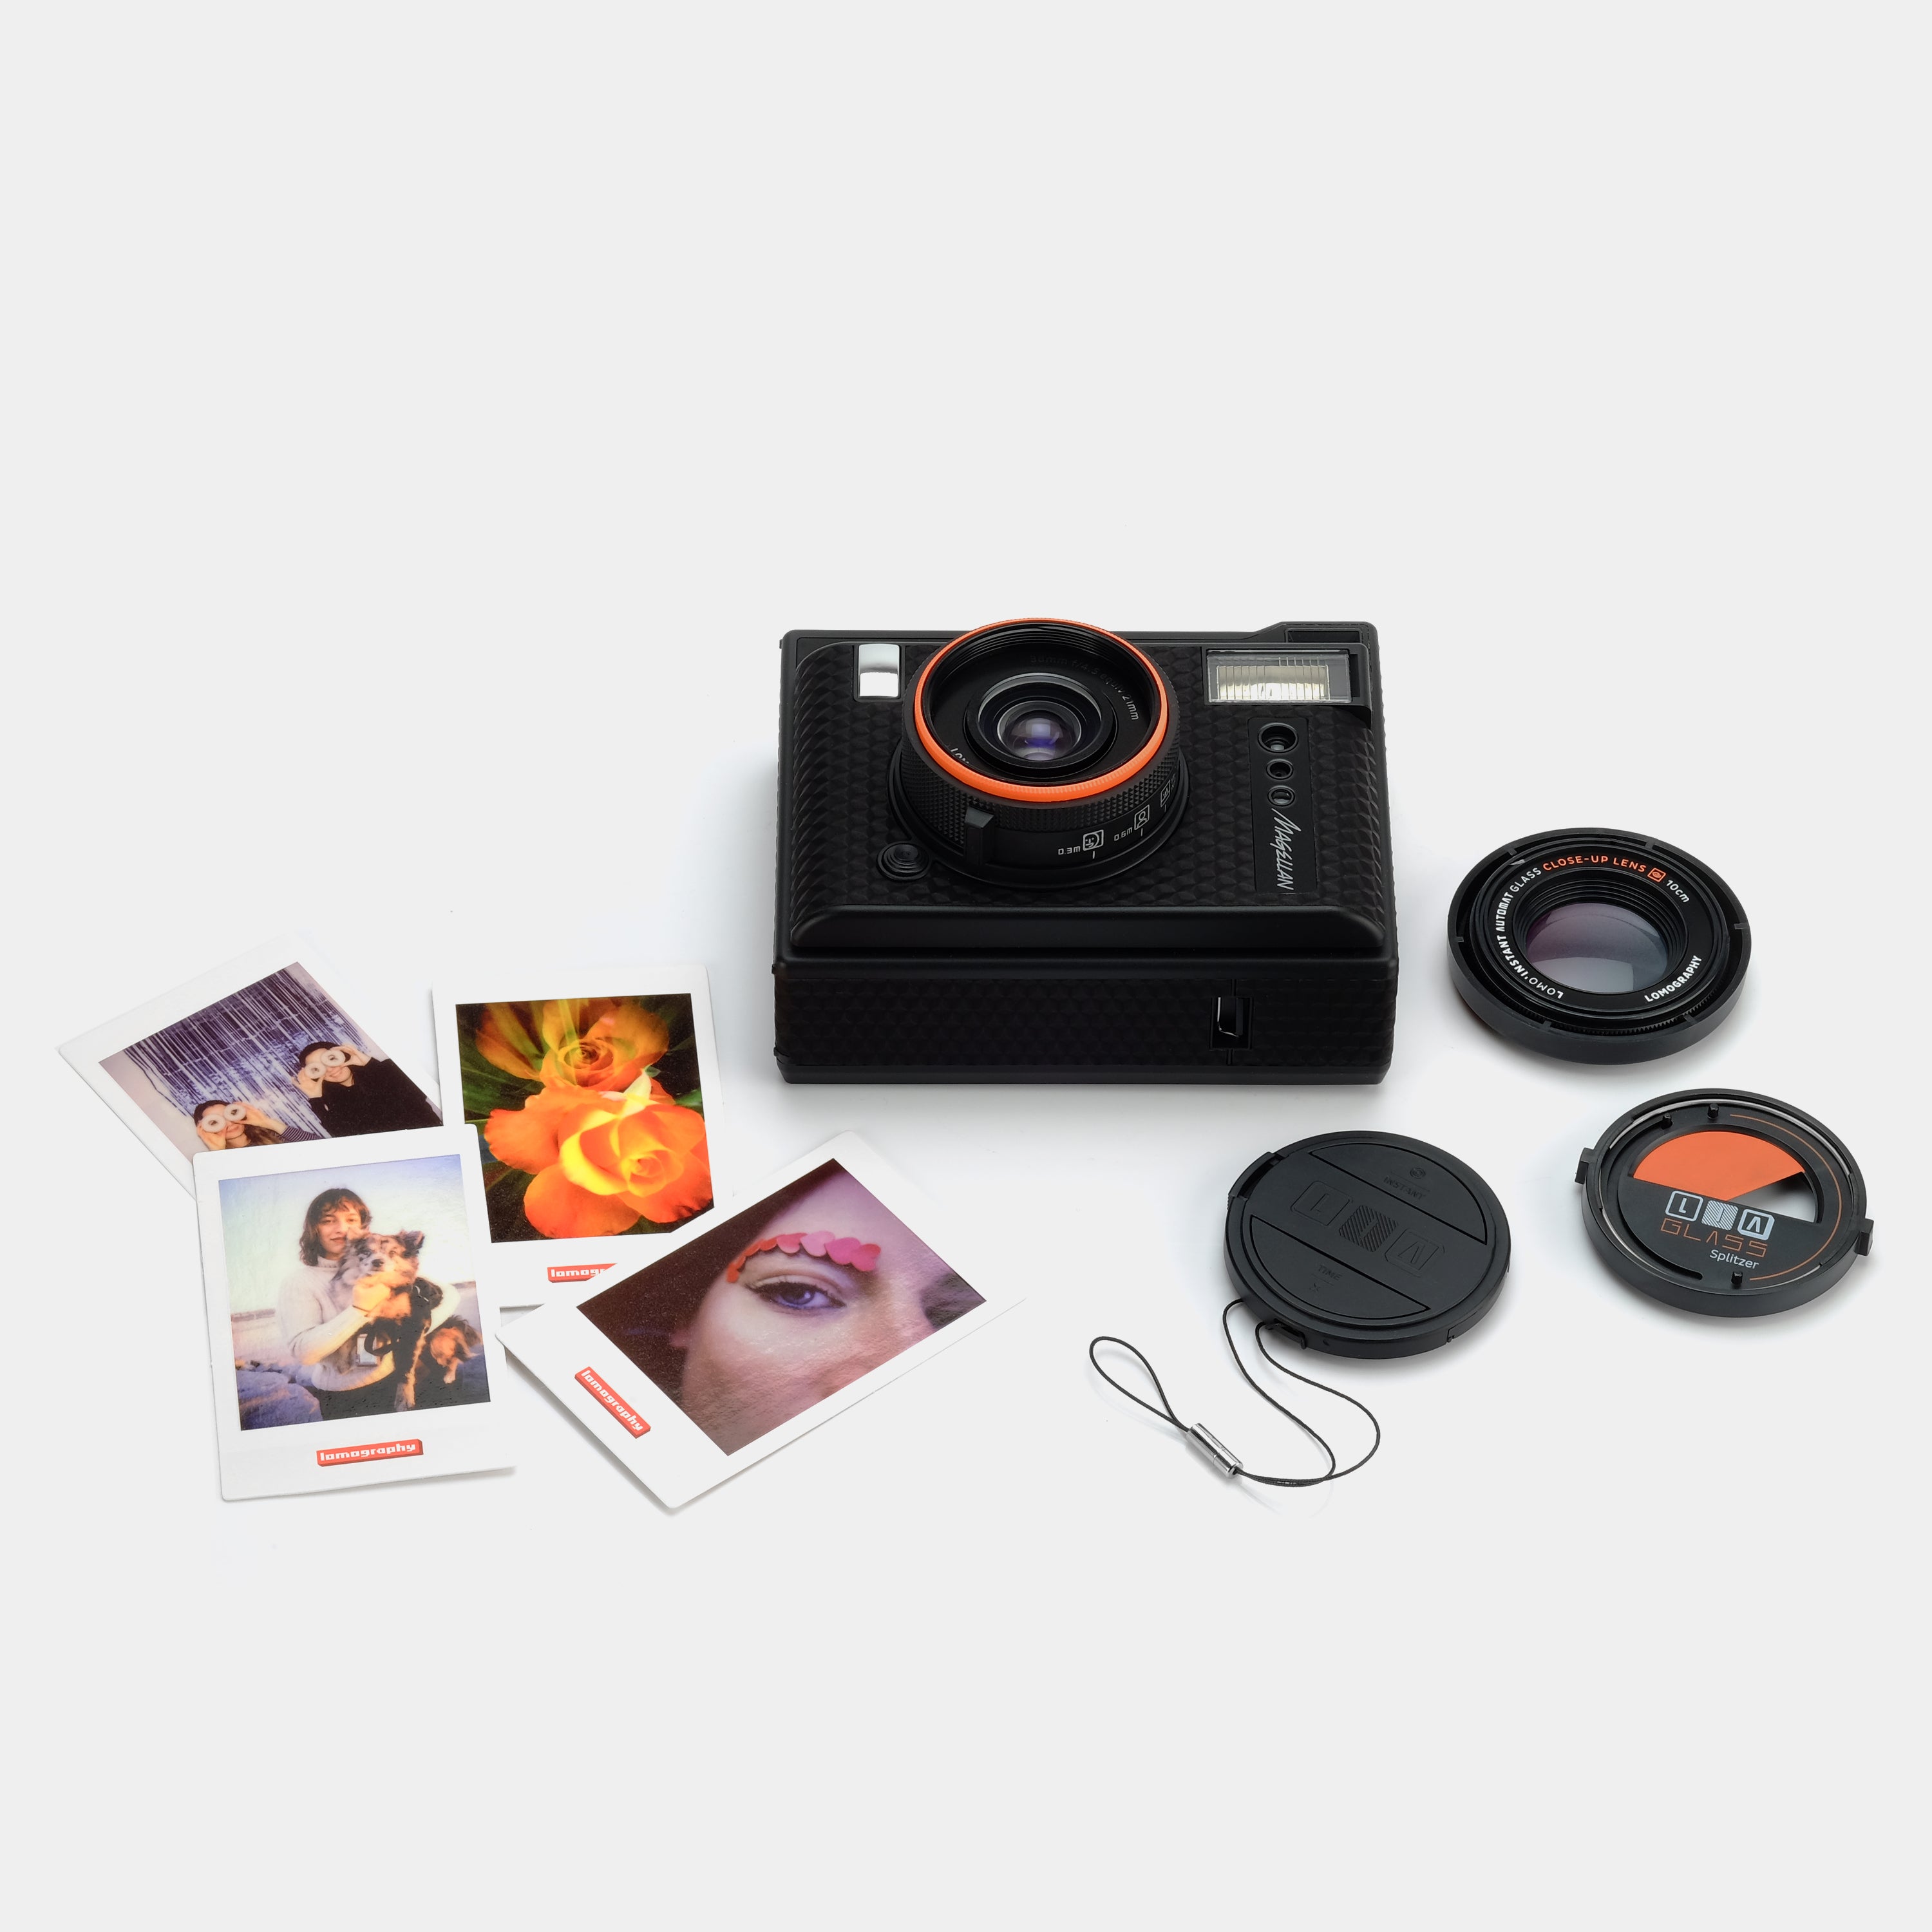 Lomography Lomo'Instant Automat Glass (Magellan Edition) Instax Mini Black Instant Film Camera